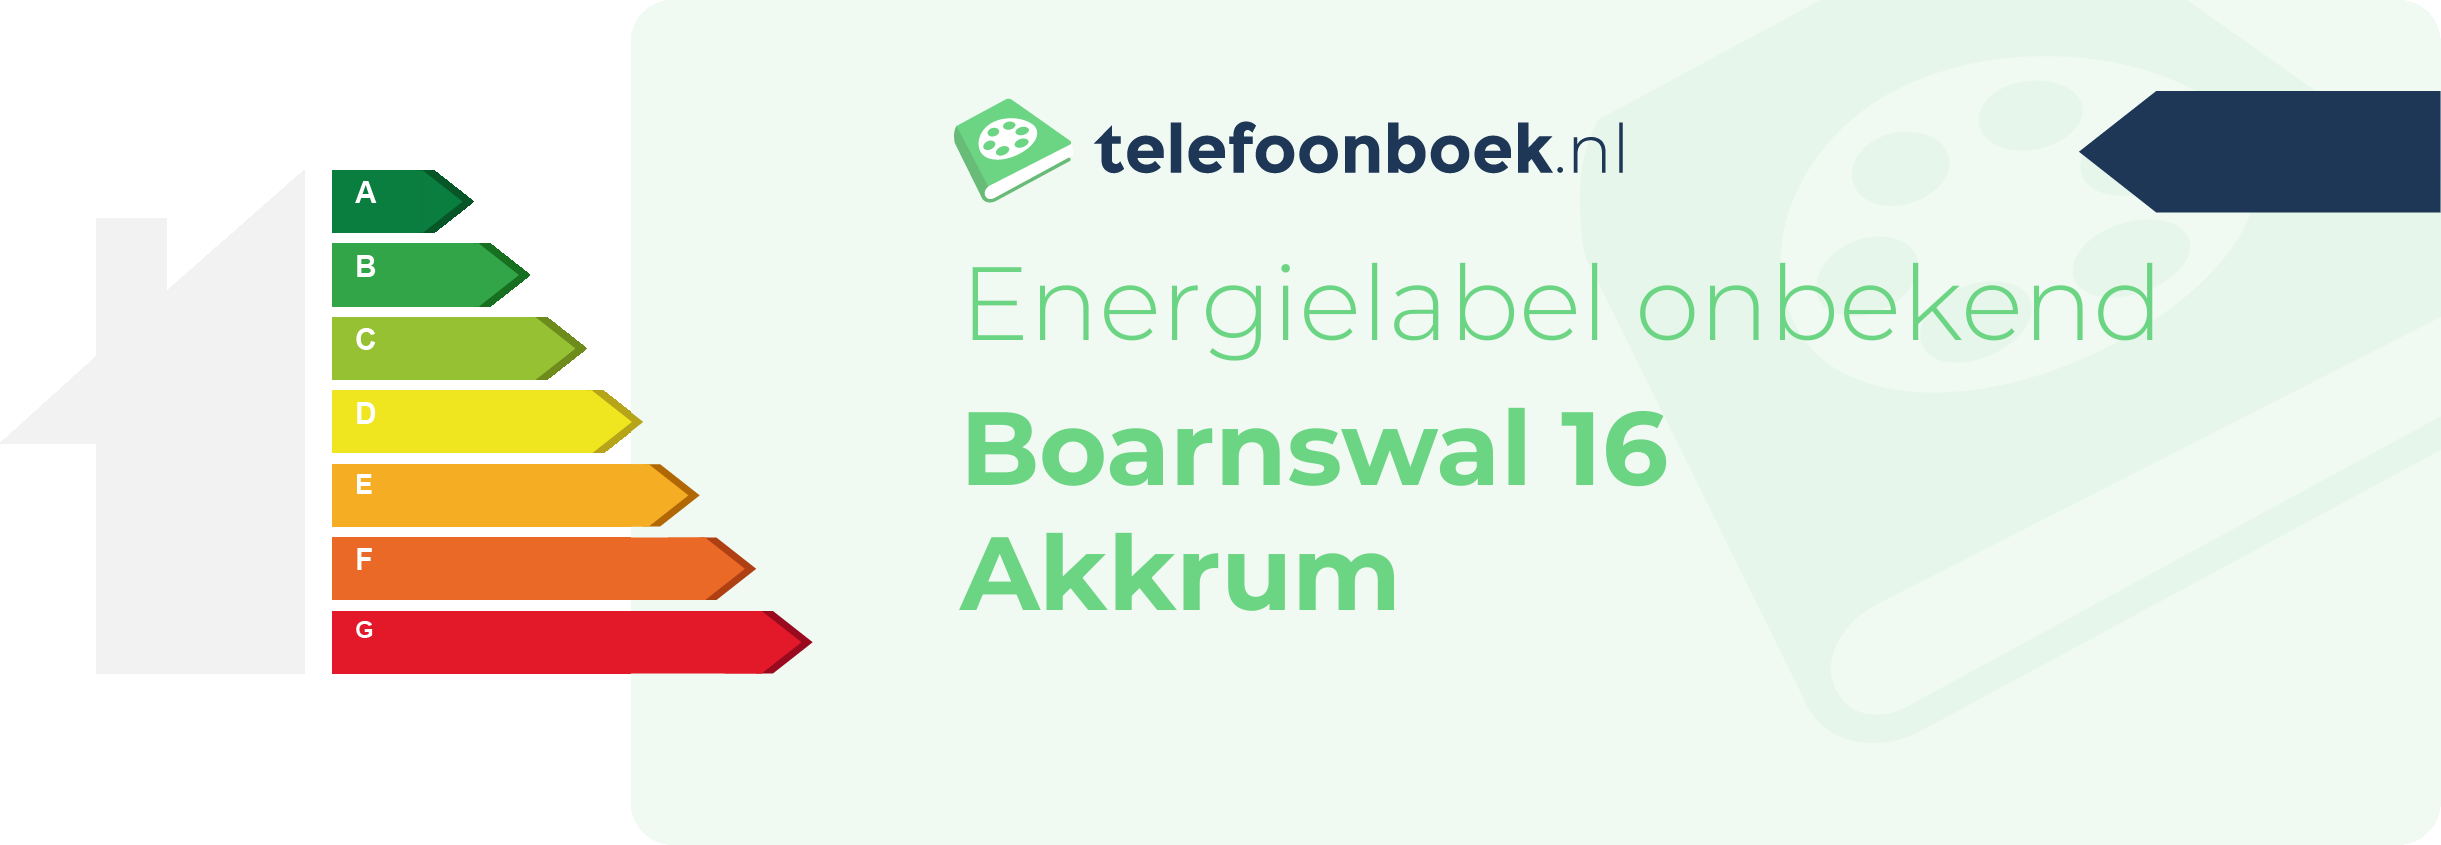 Energielabel Boarnswal 16 Akkrum